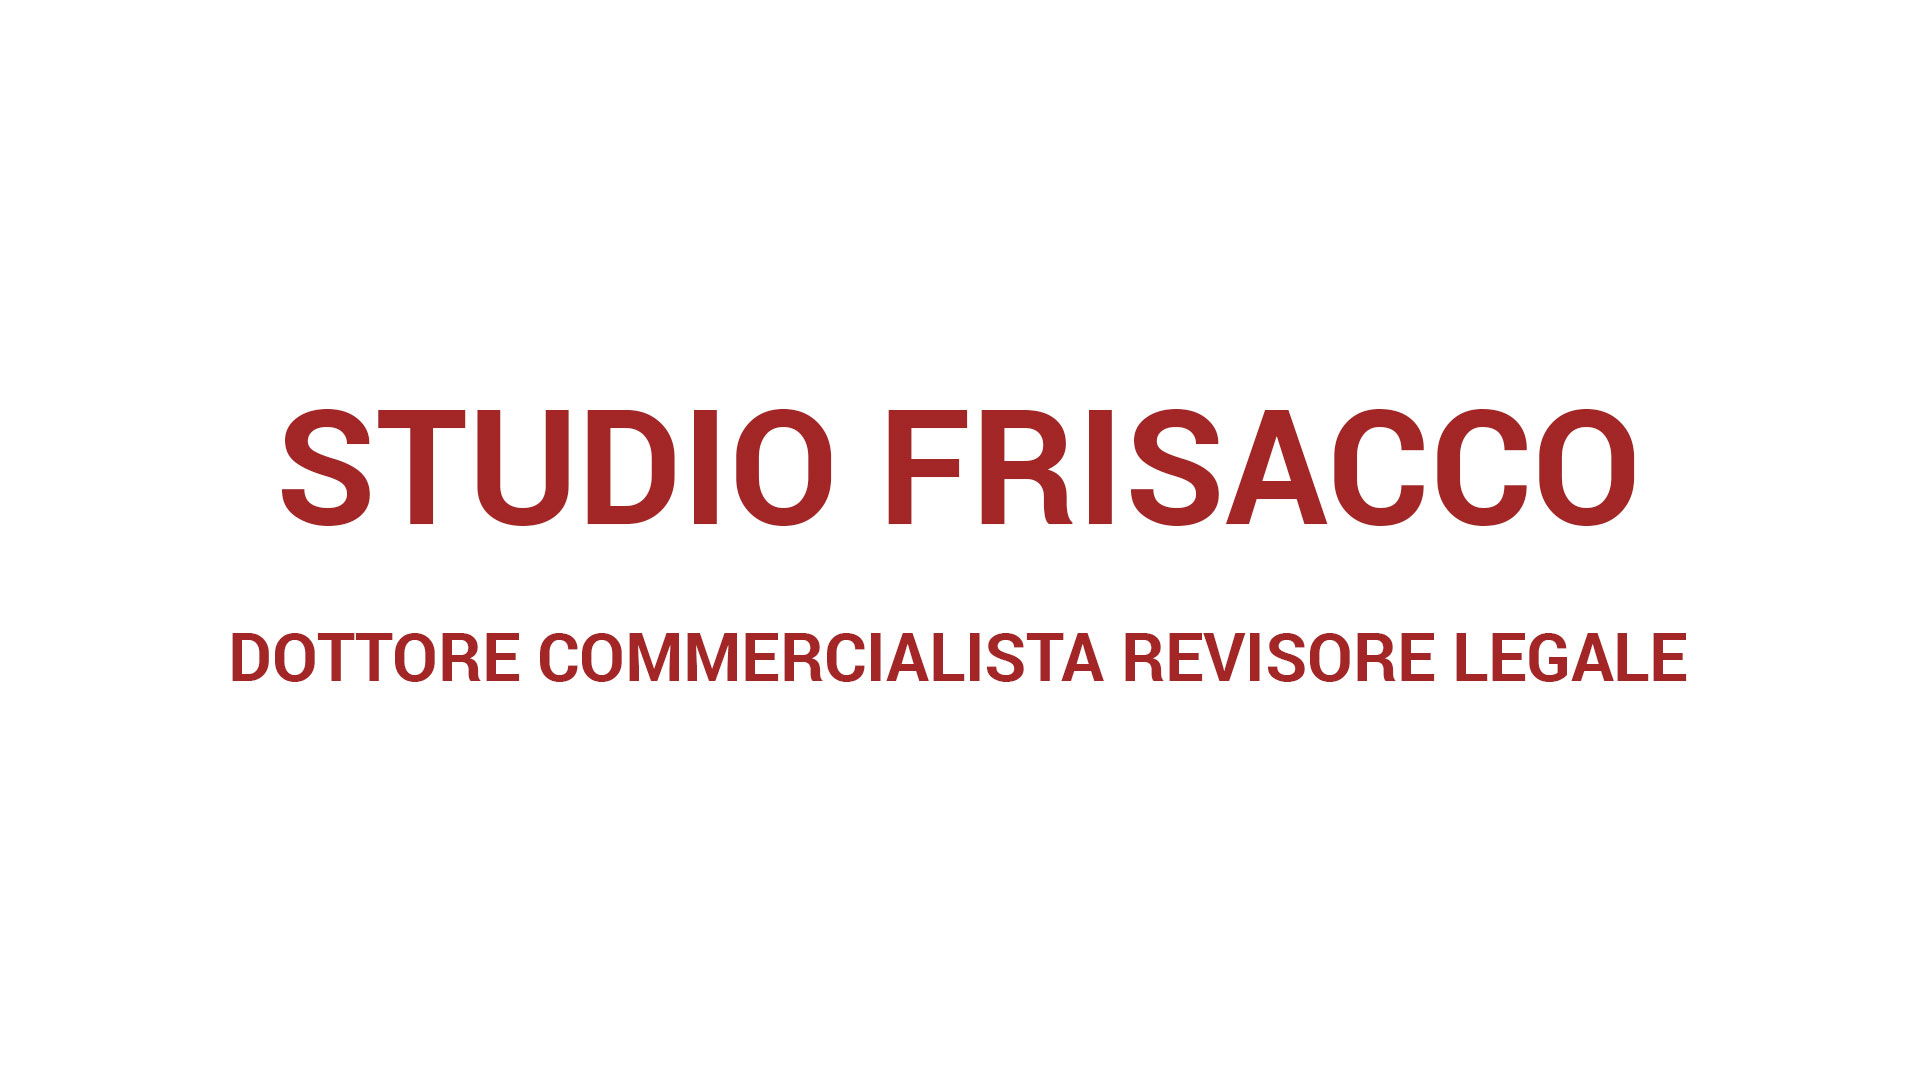 STUDIO FRISACCO